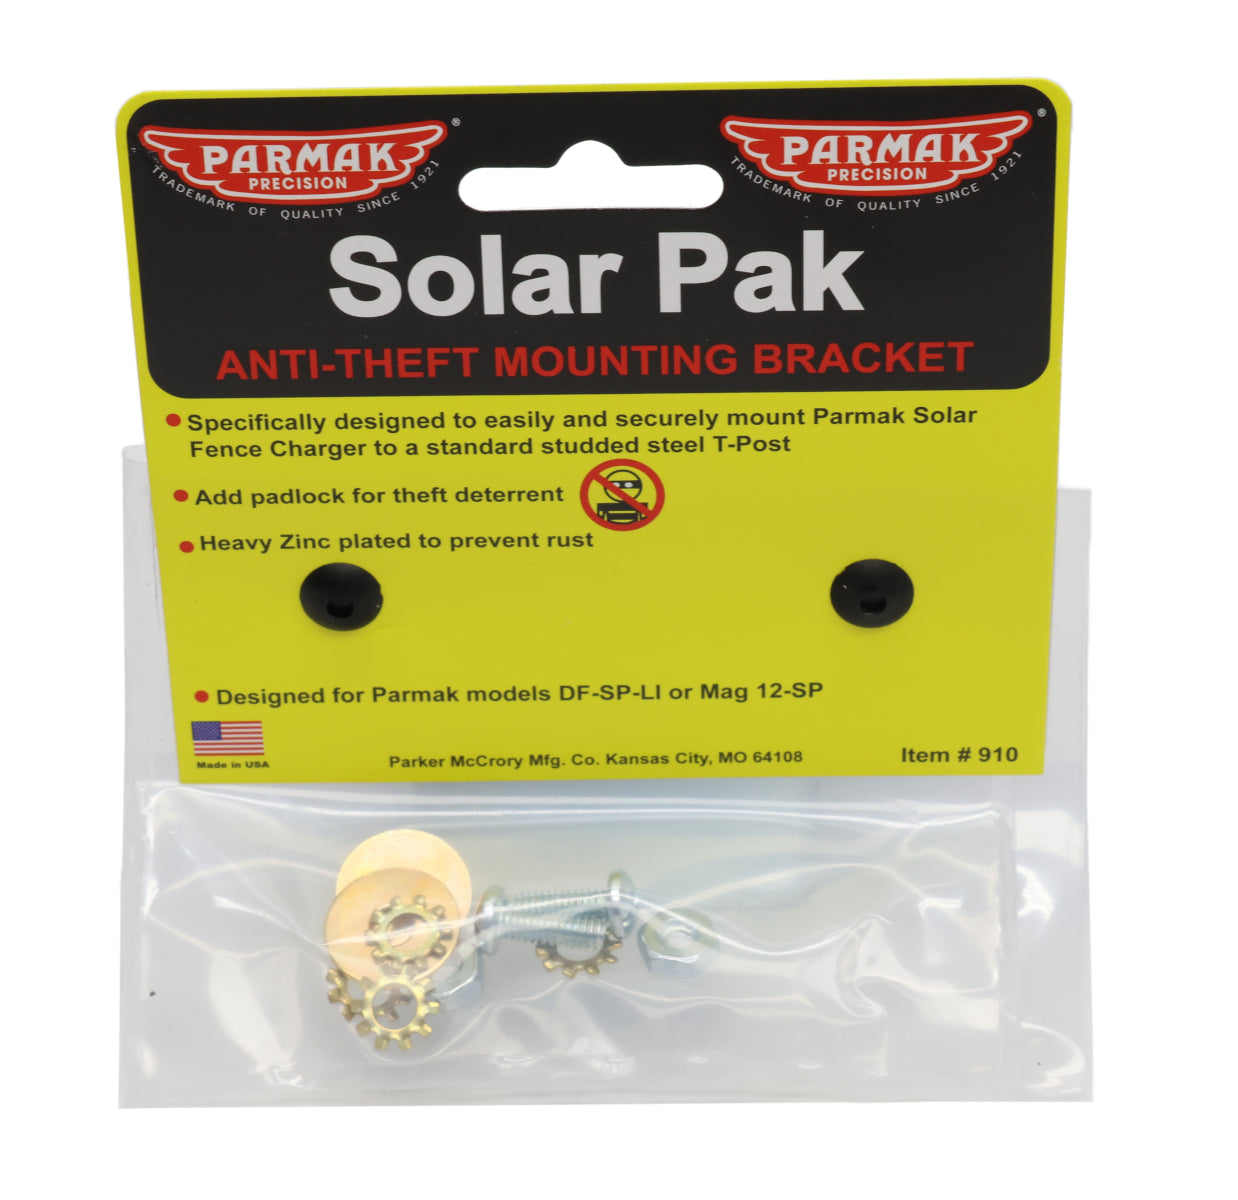 Parmak Solarpak T-post Mounting Bracket - 311910